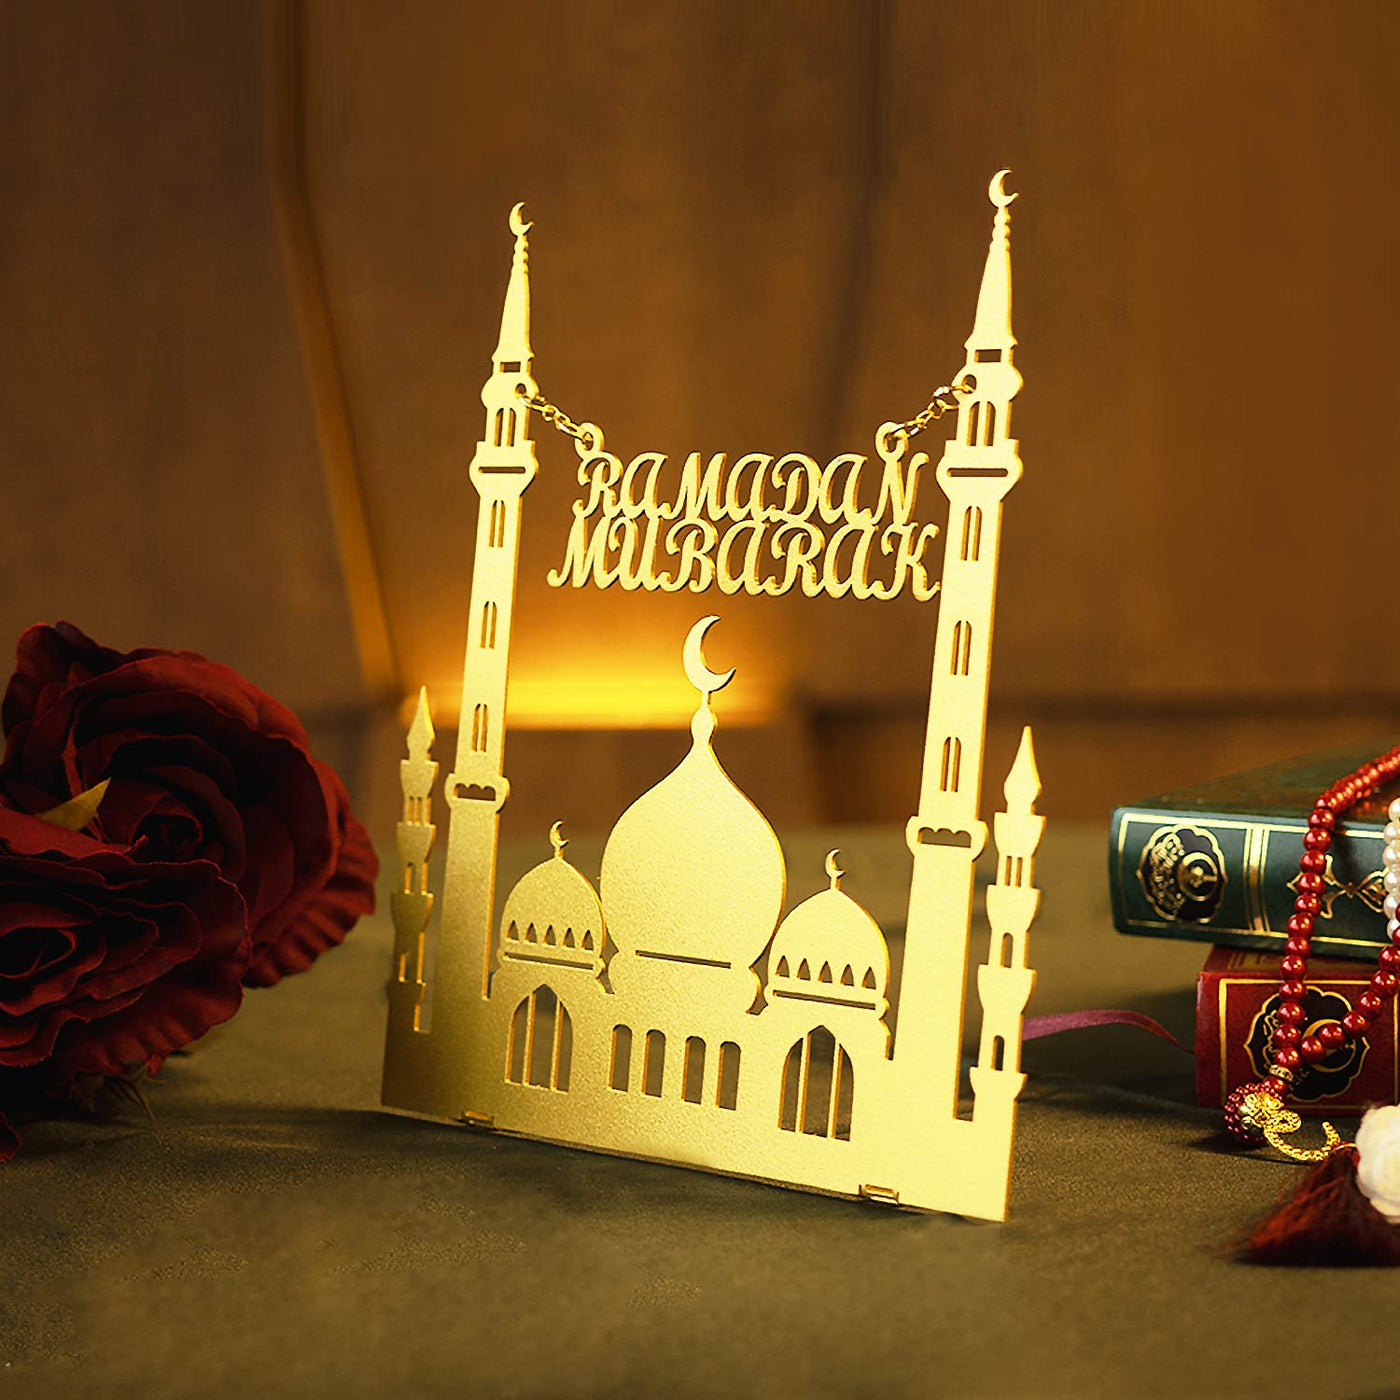 Ramadan Mubarak Metal Tabletop Decor - WAMH101